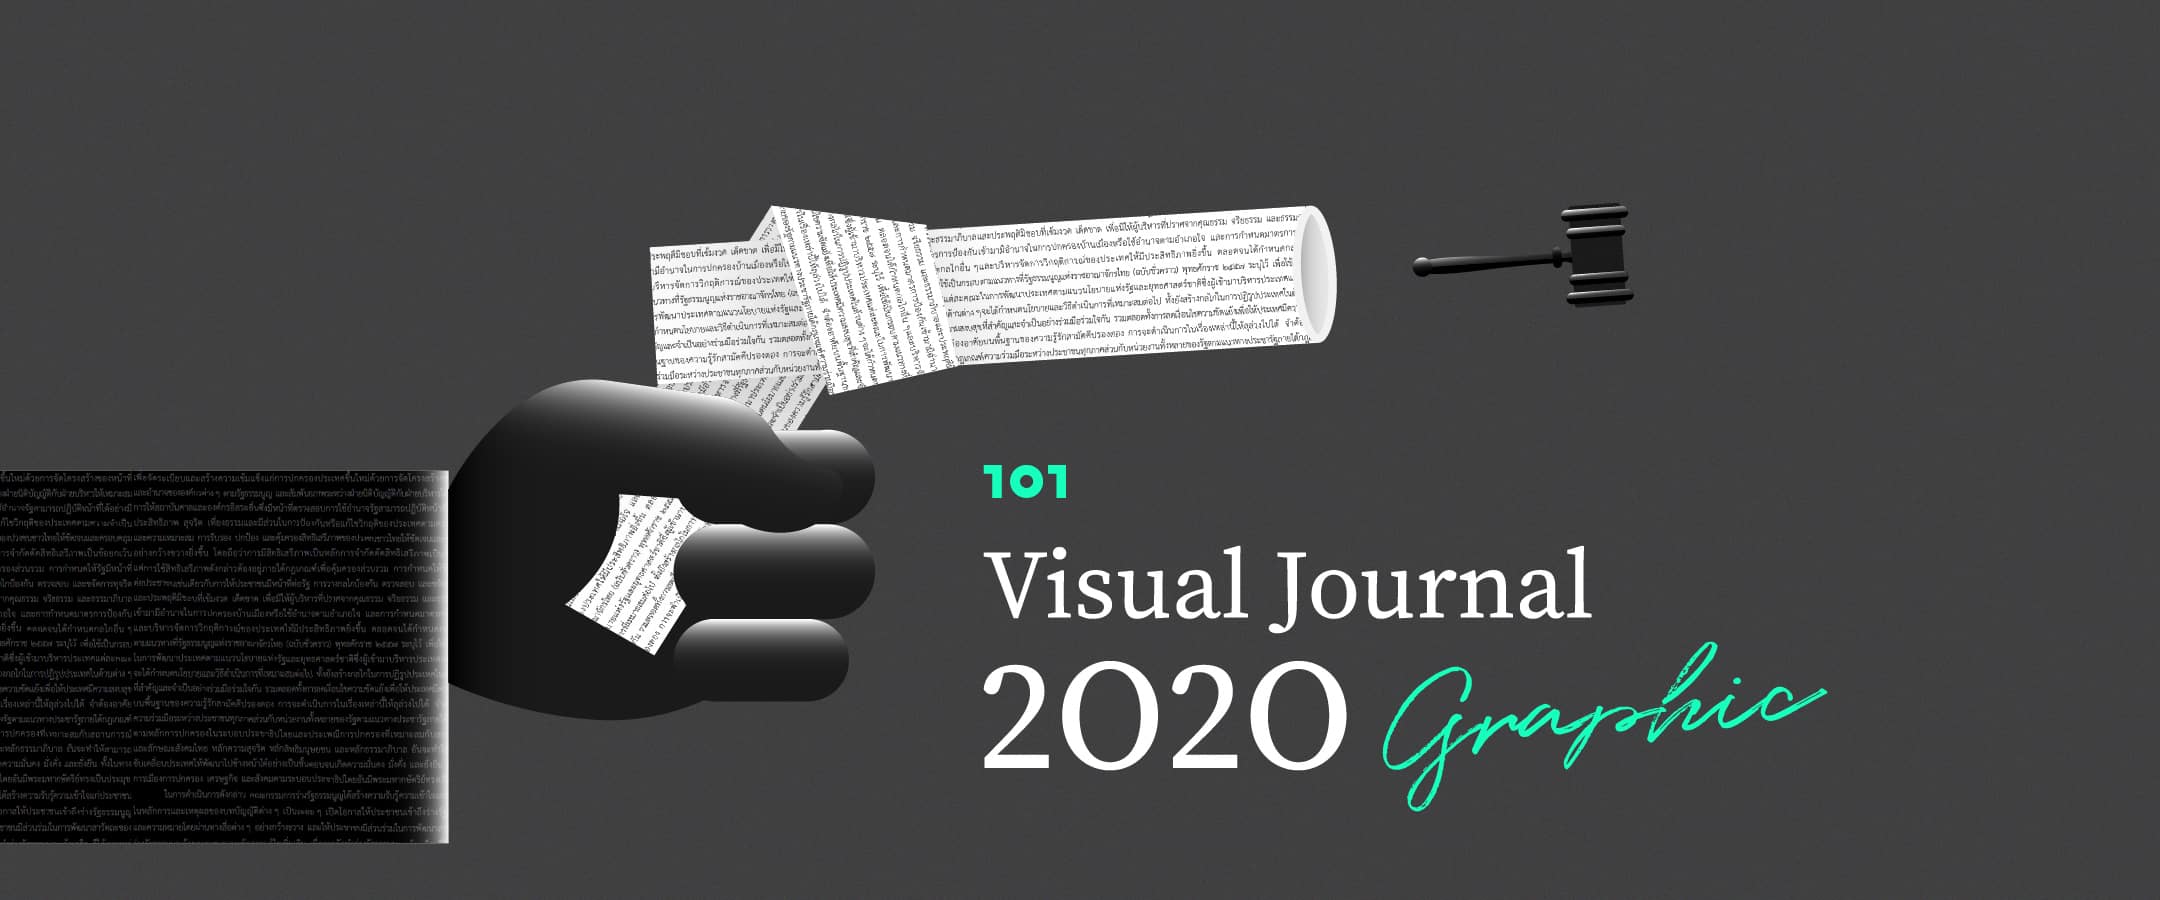 101 Visual Journal 2020 : Graphic